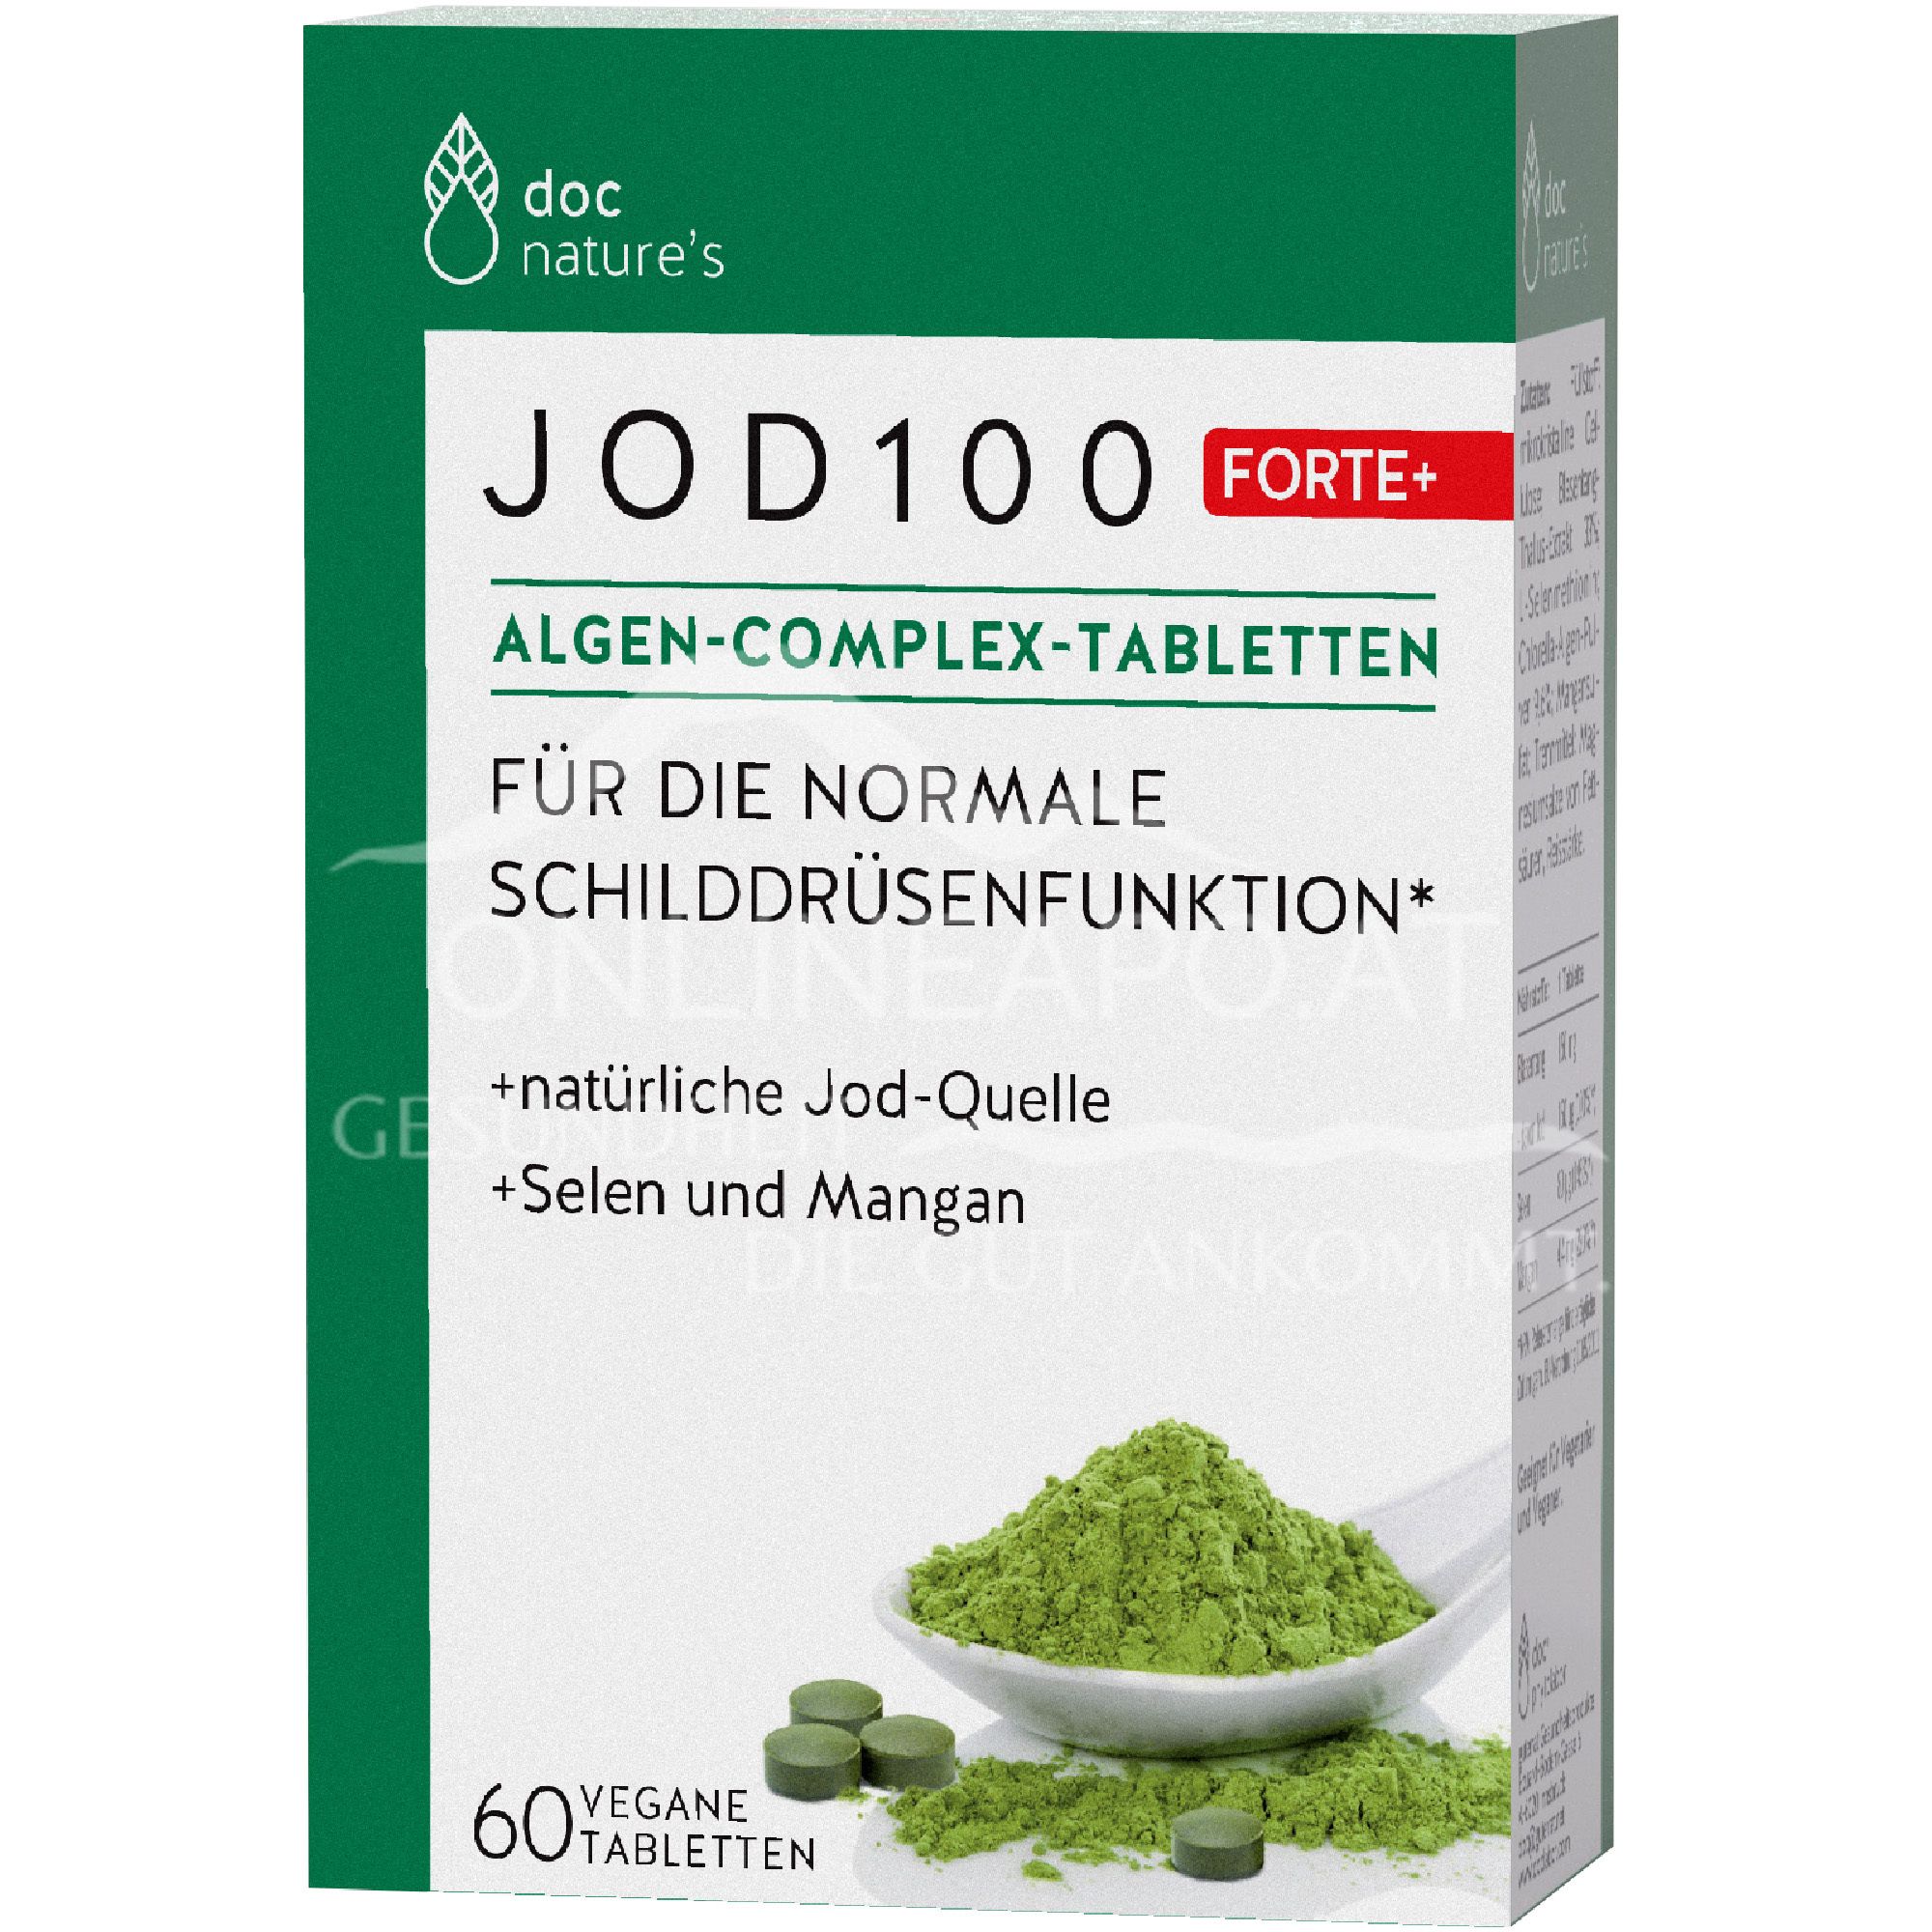 doc nature’s Jod 100 Forte + Algen-Complex-Tabletten